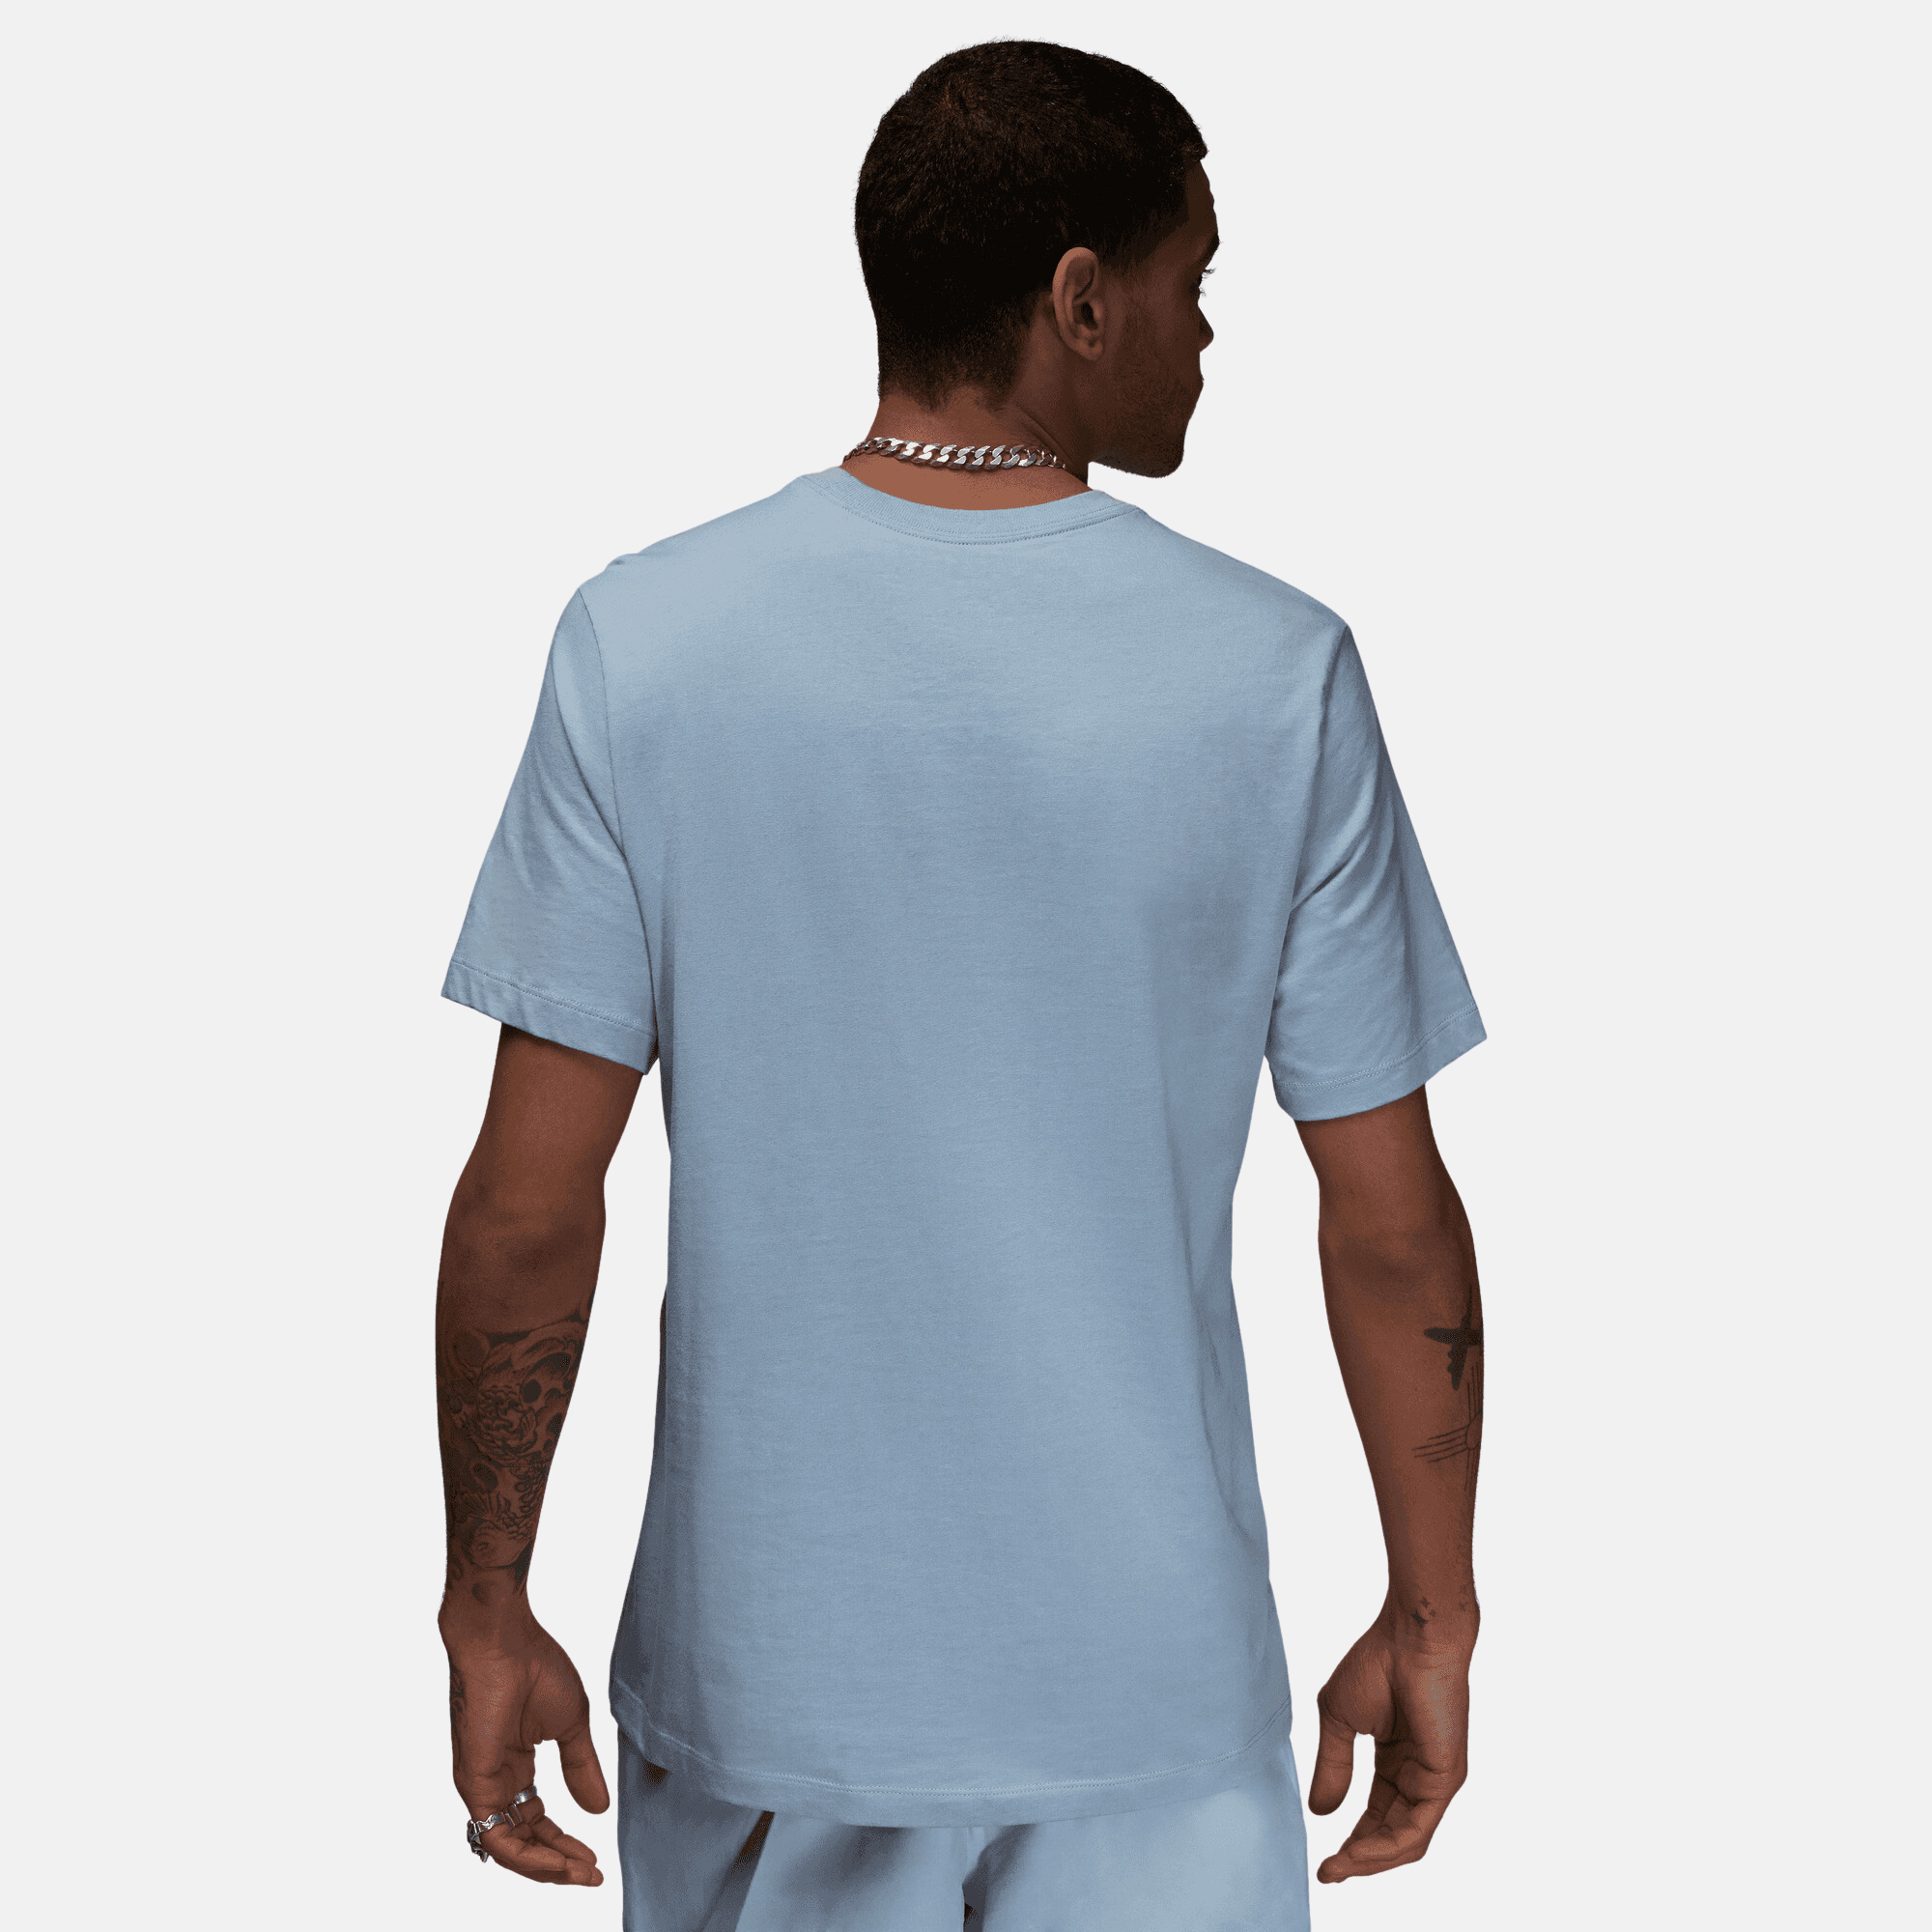 Air Jordan Brand Blue Grey T-Shirt